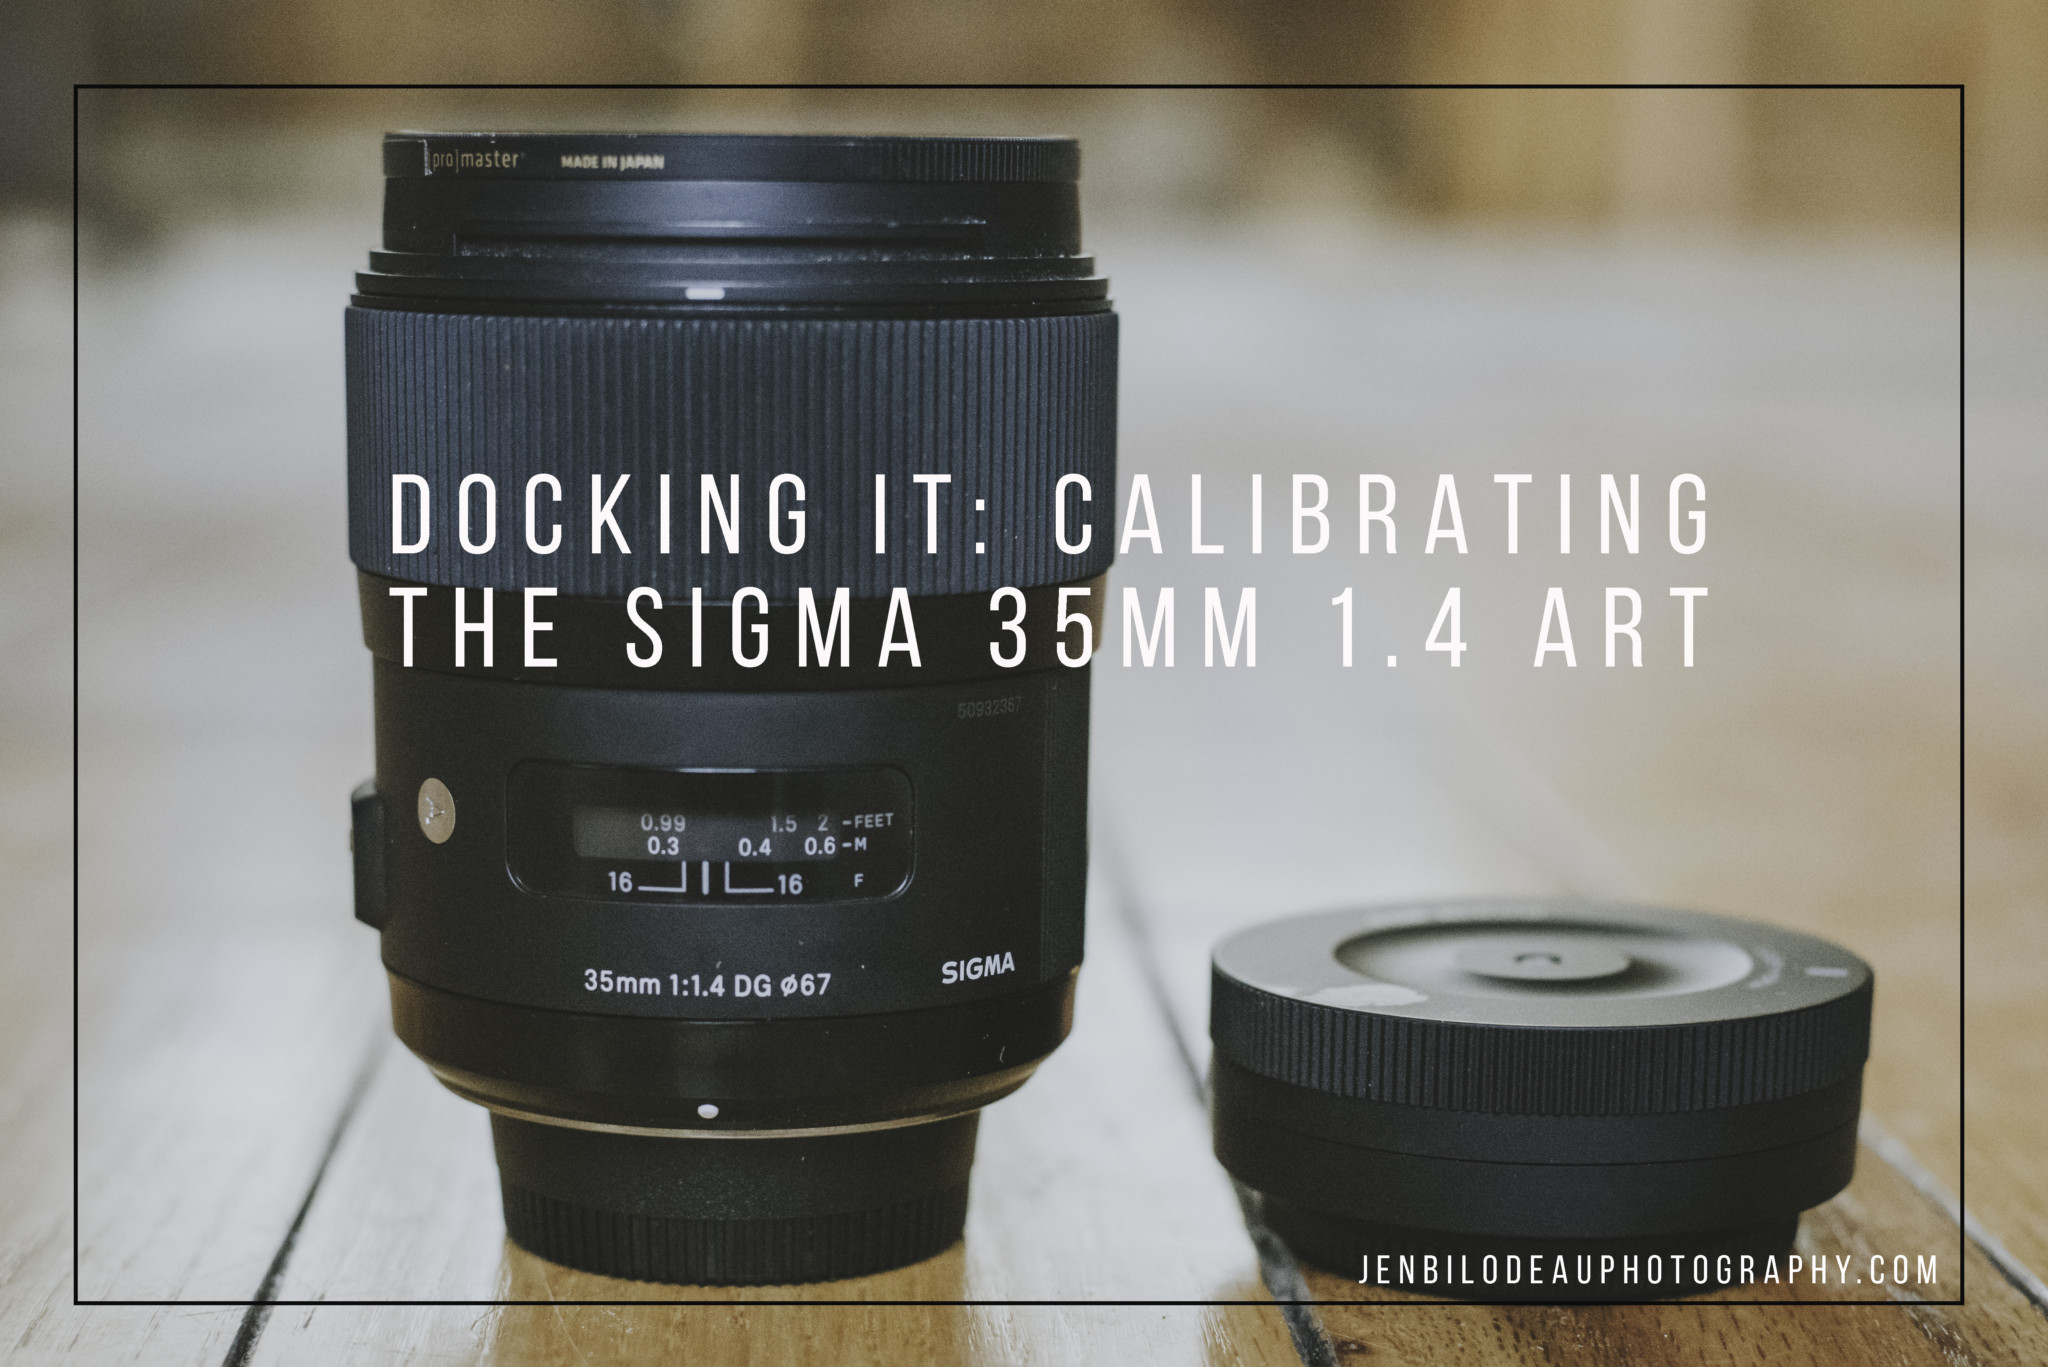 Docking It: Calibrating The Sigma 35mm 1.4 ART